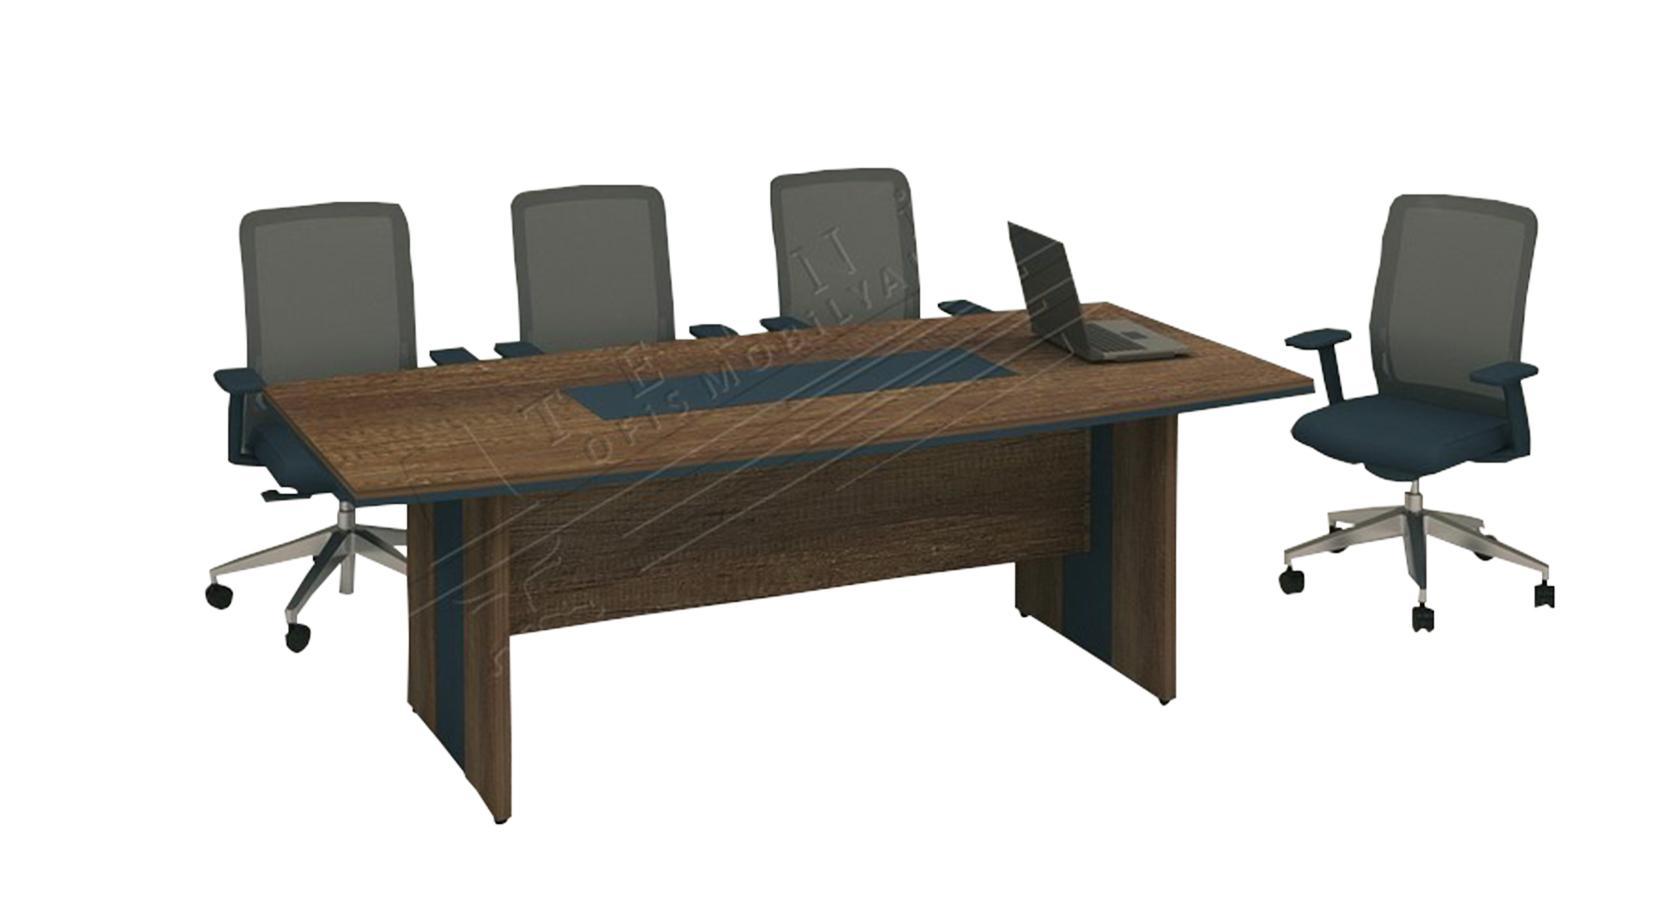 karan ahşap oval toplantı masası 180cm